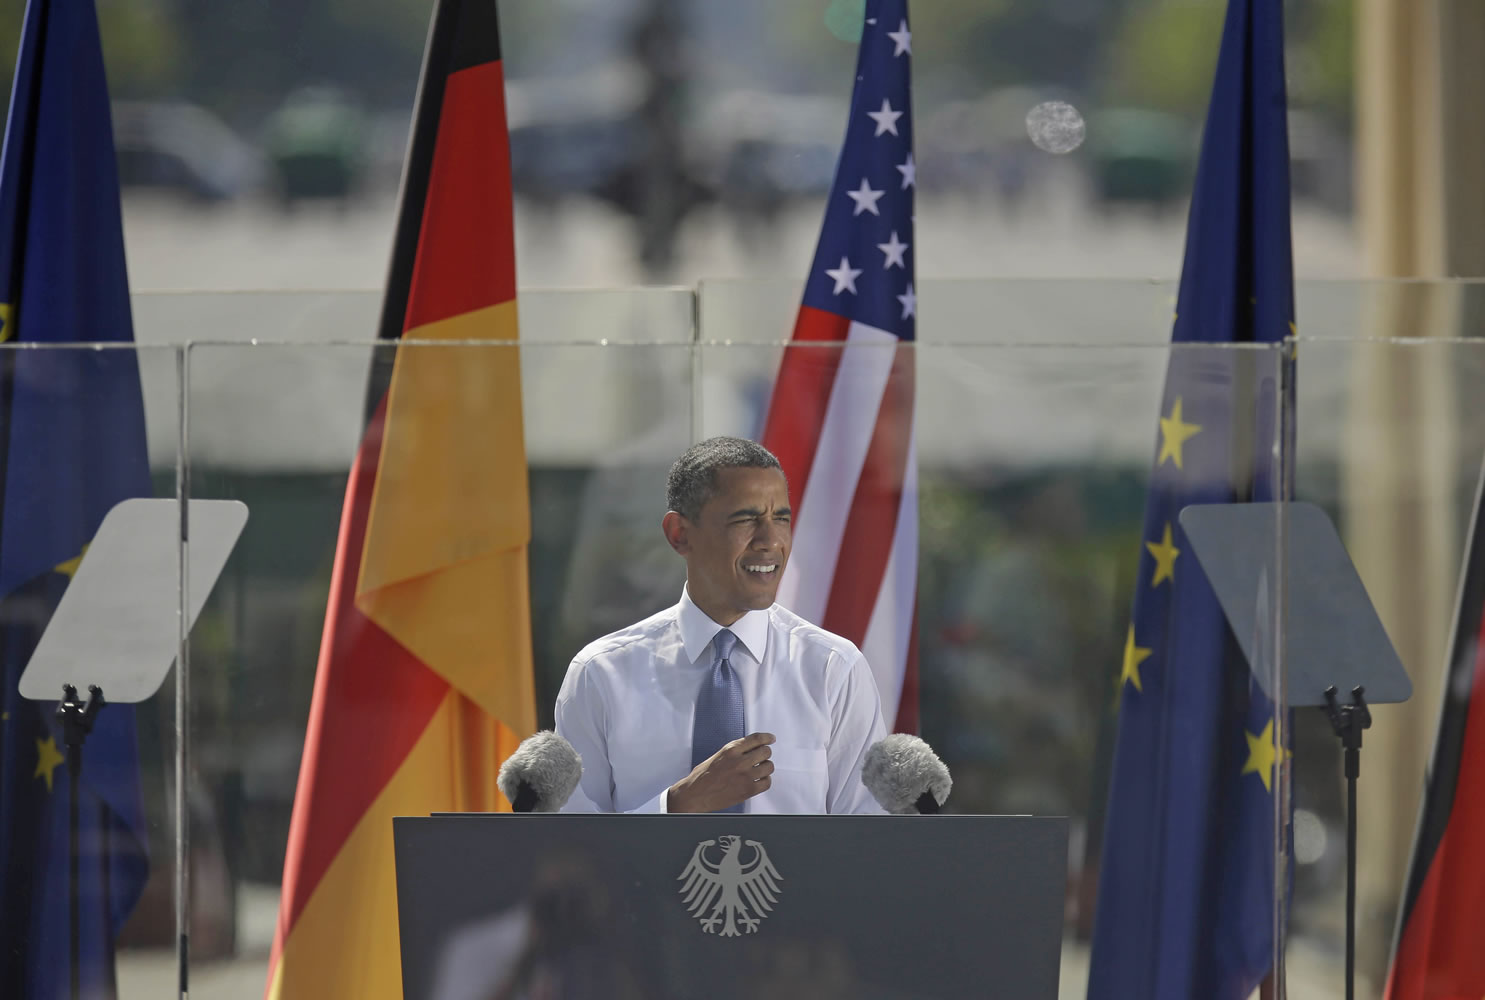 President Barack Obama speaks in front of the iconic Brandenburg Gate in Berlin Germany on Wednesday.